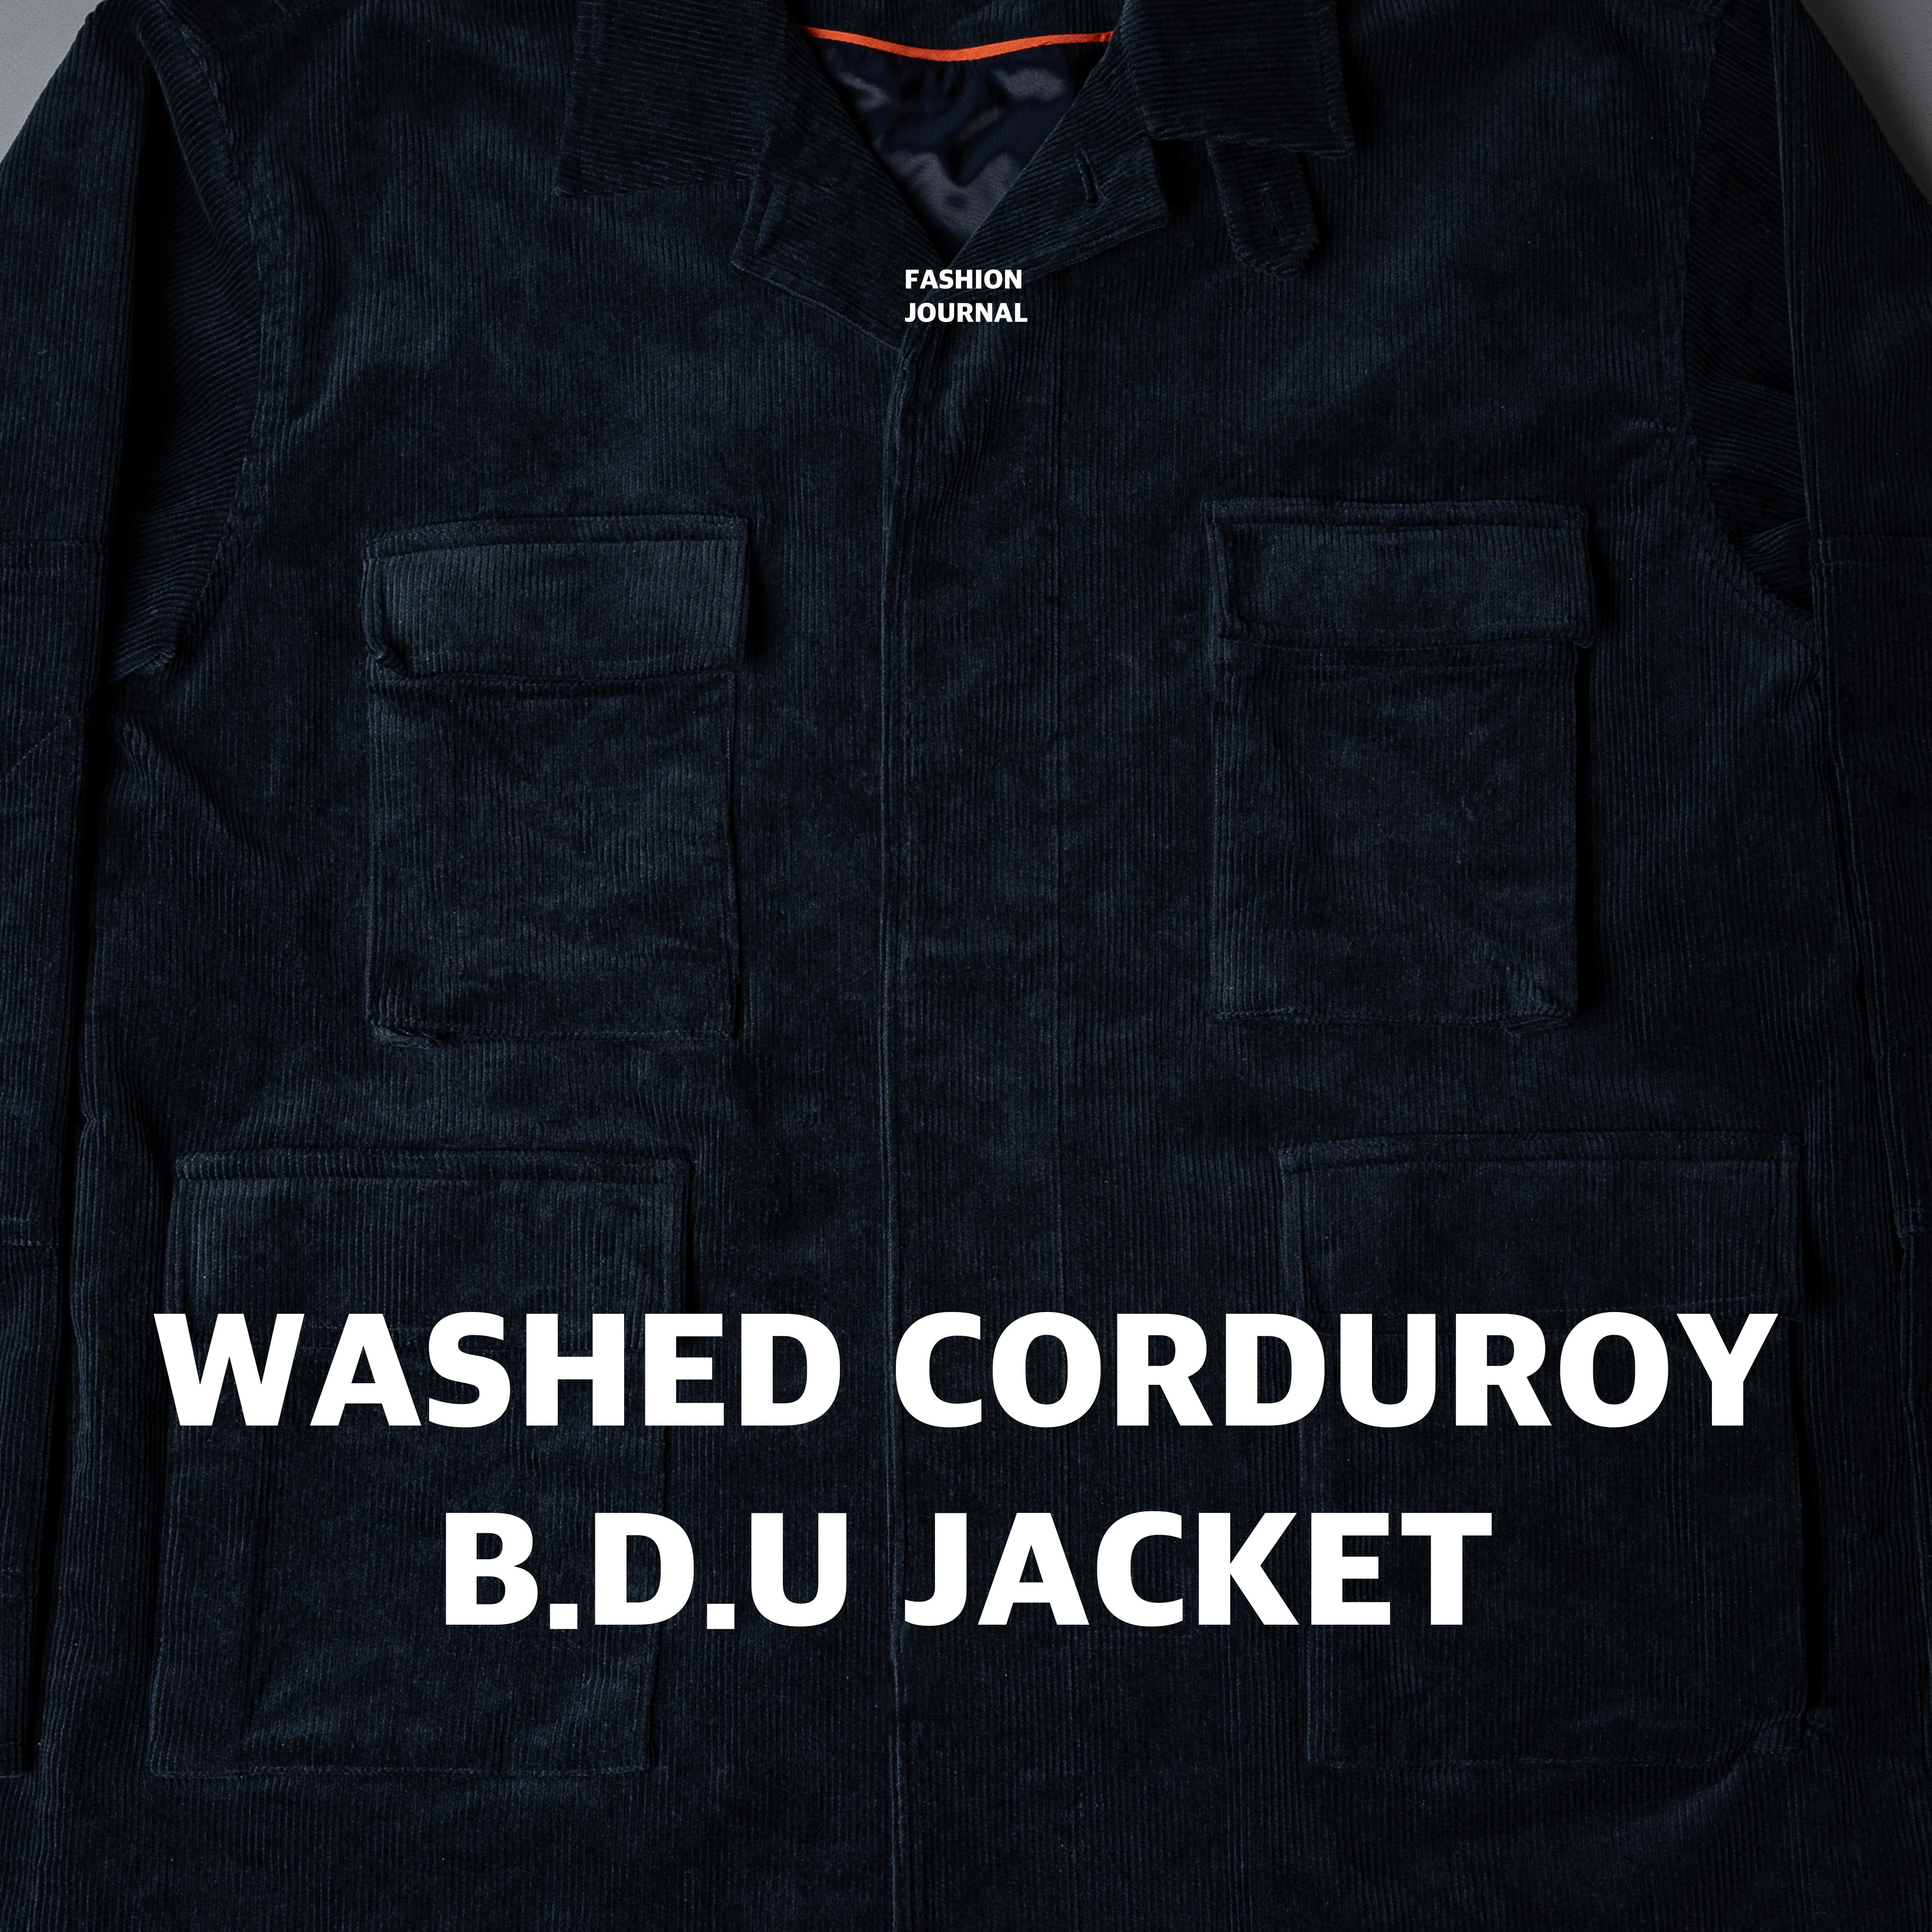 WASHED CORDUROY B.D.U JACKET